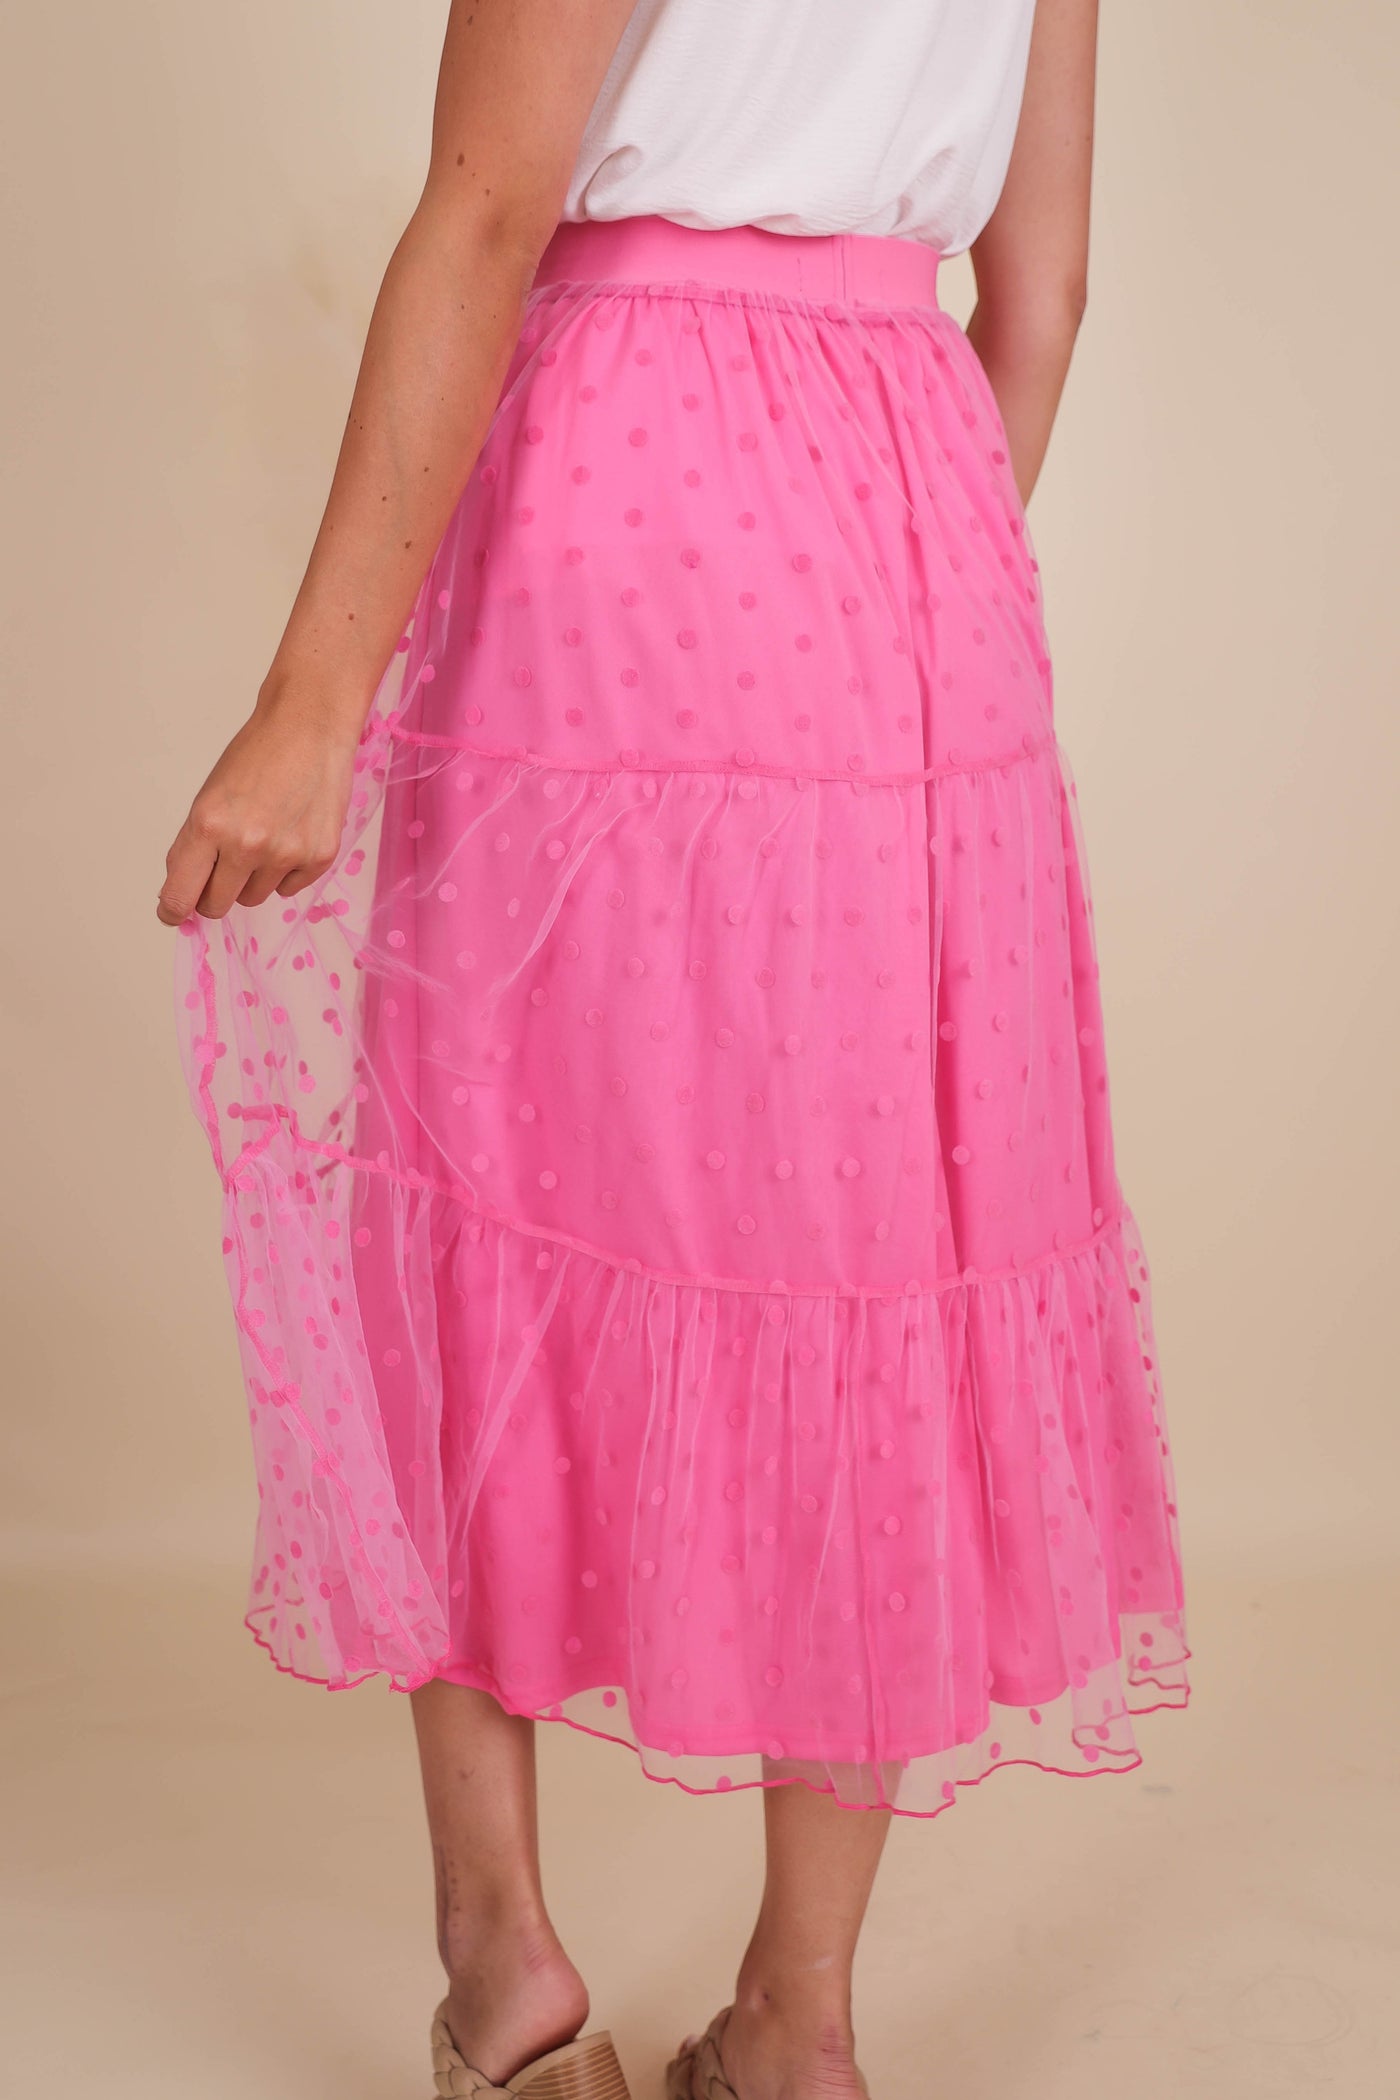 Tulle Polkadot Skirt- Women's Hot Pink Maxi Skirt- Women's Preppy Outfits